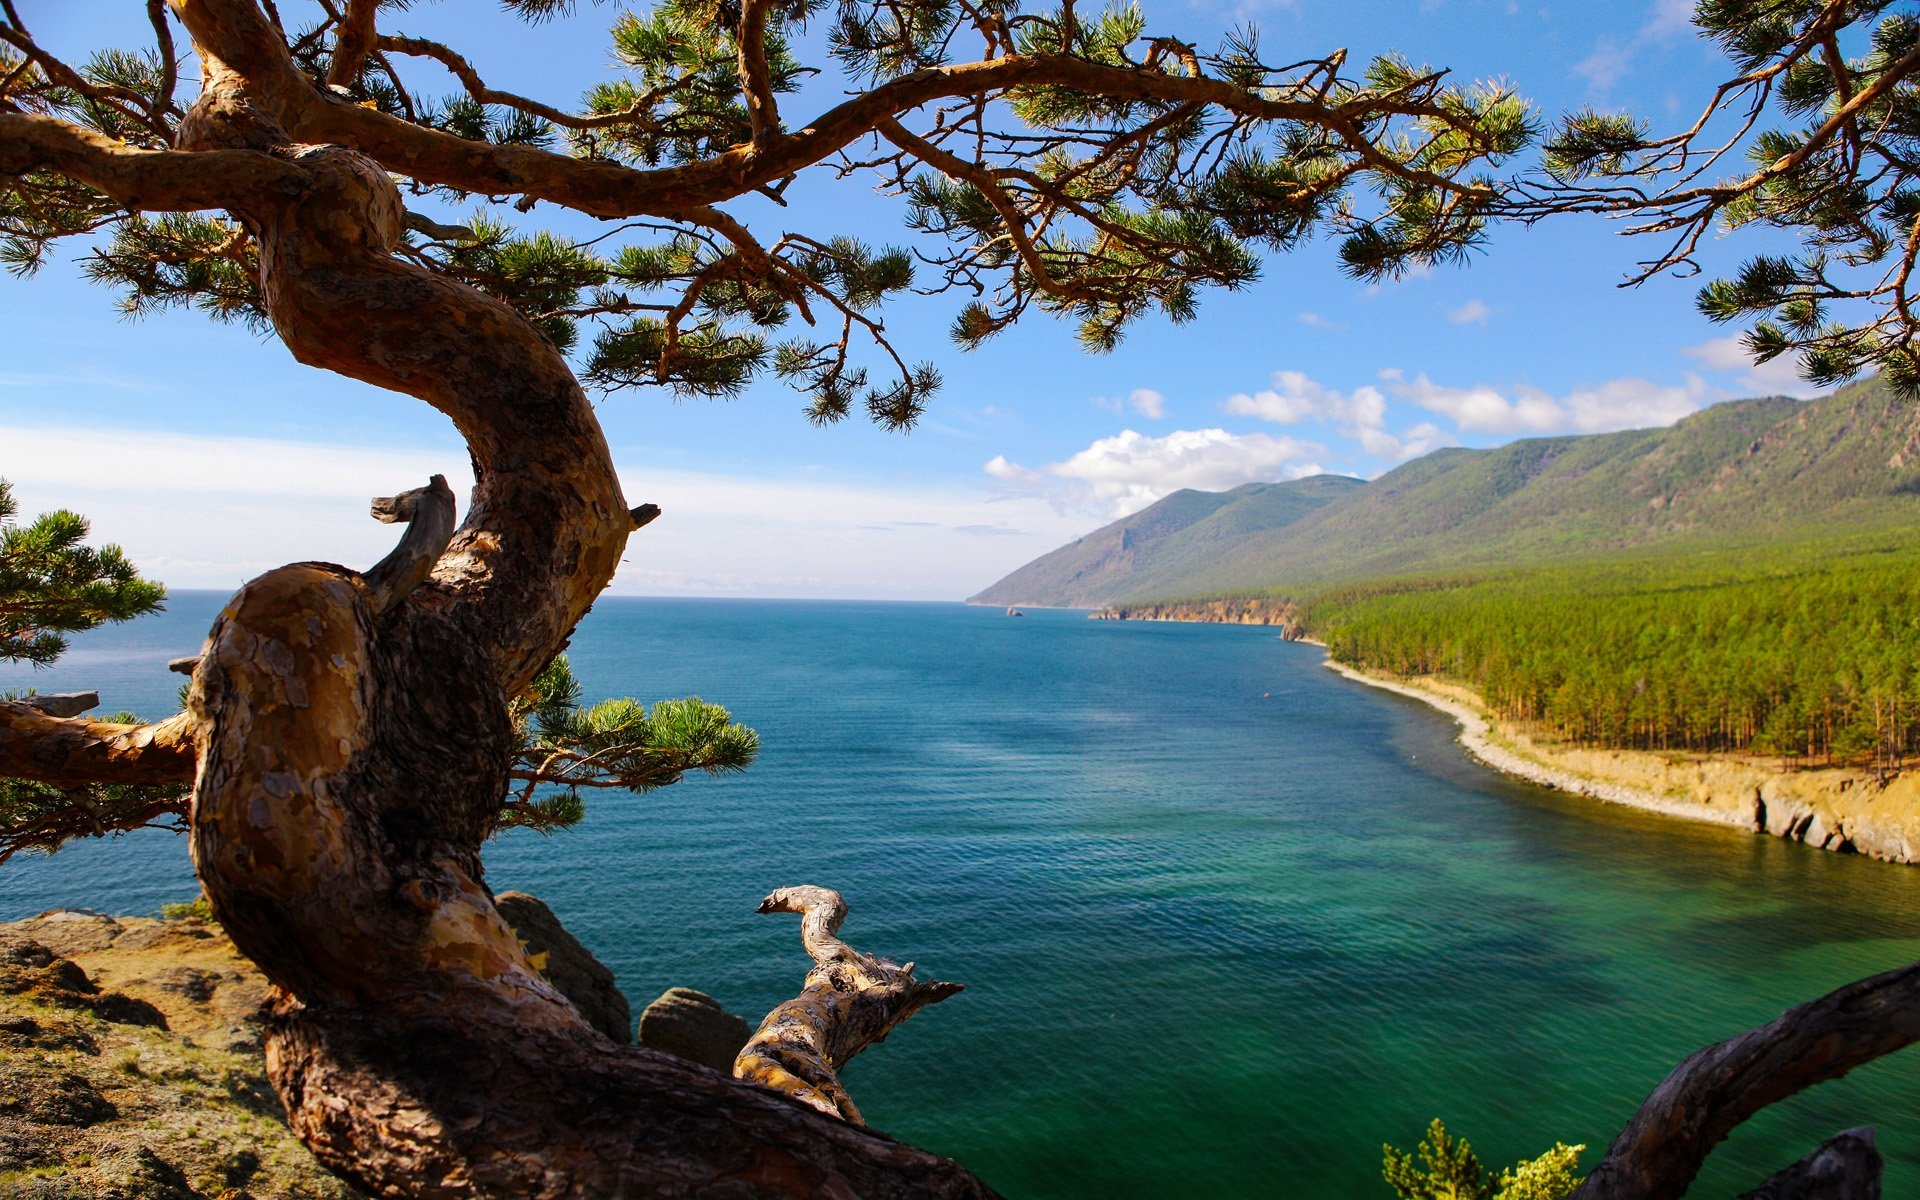 Lake Baikal Windows 10 theme, Stunning wallpaper, Russia's pristine beauty, Desktop customization, 1920x1200 HD Desktop